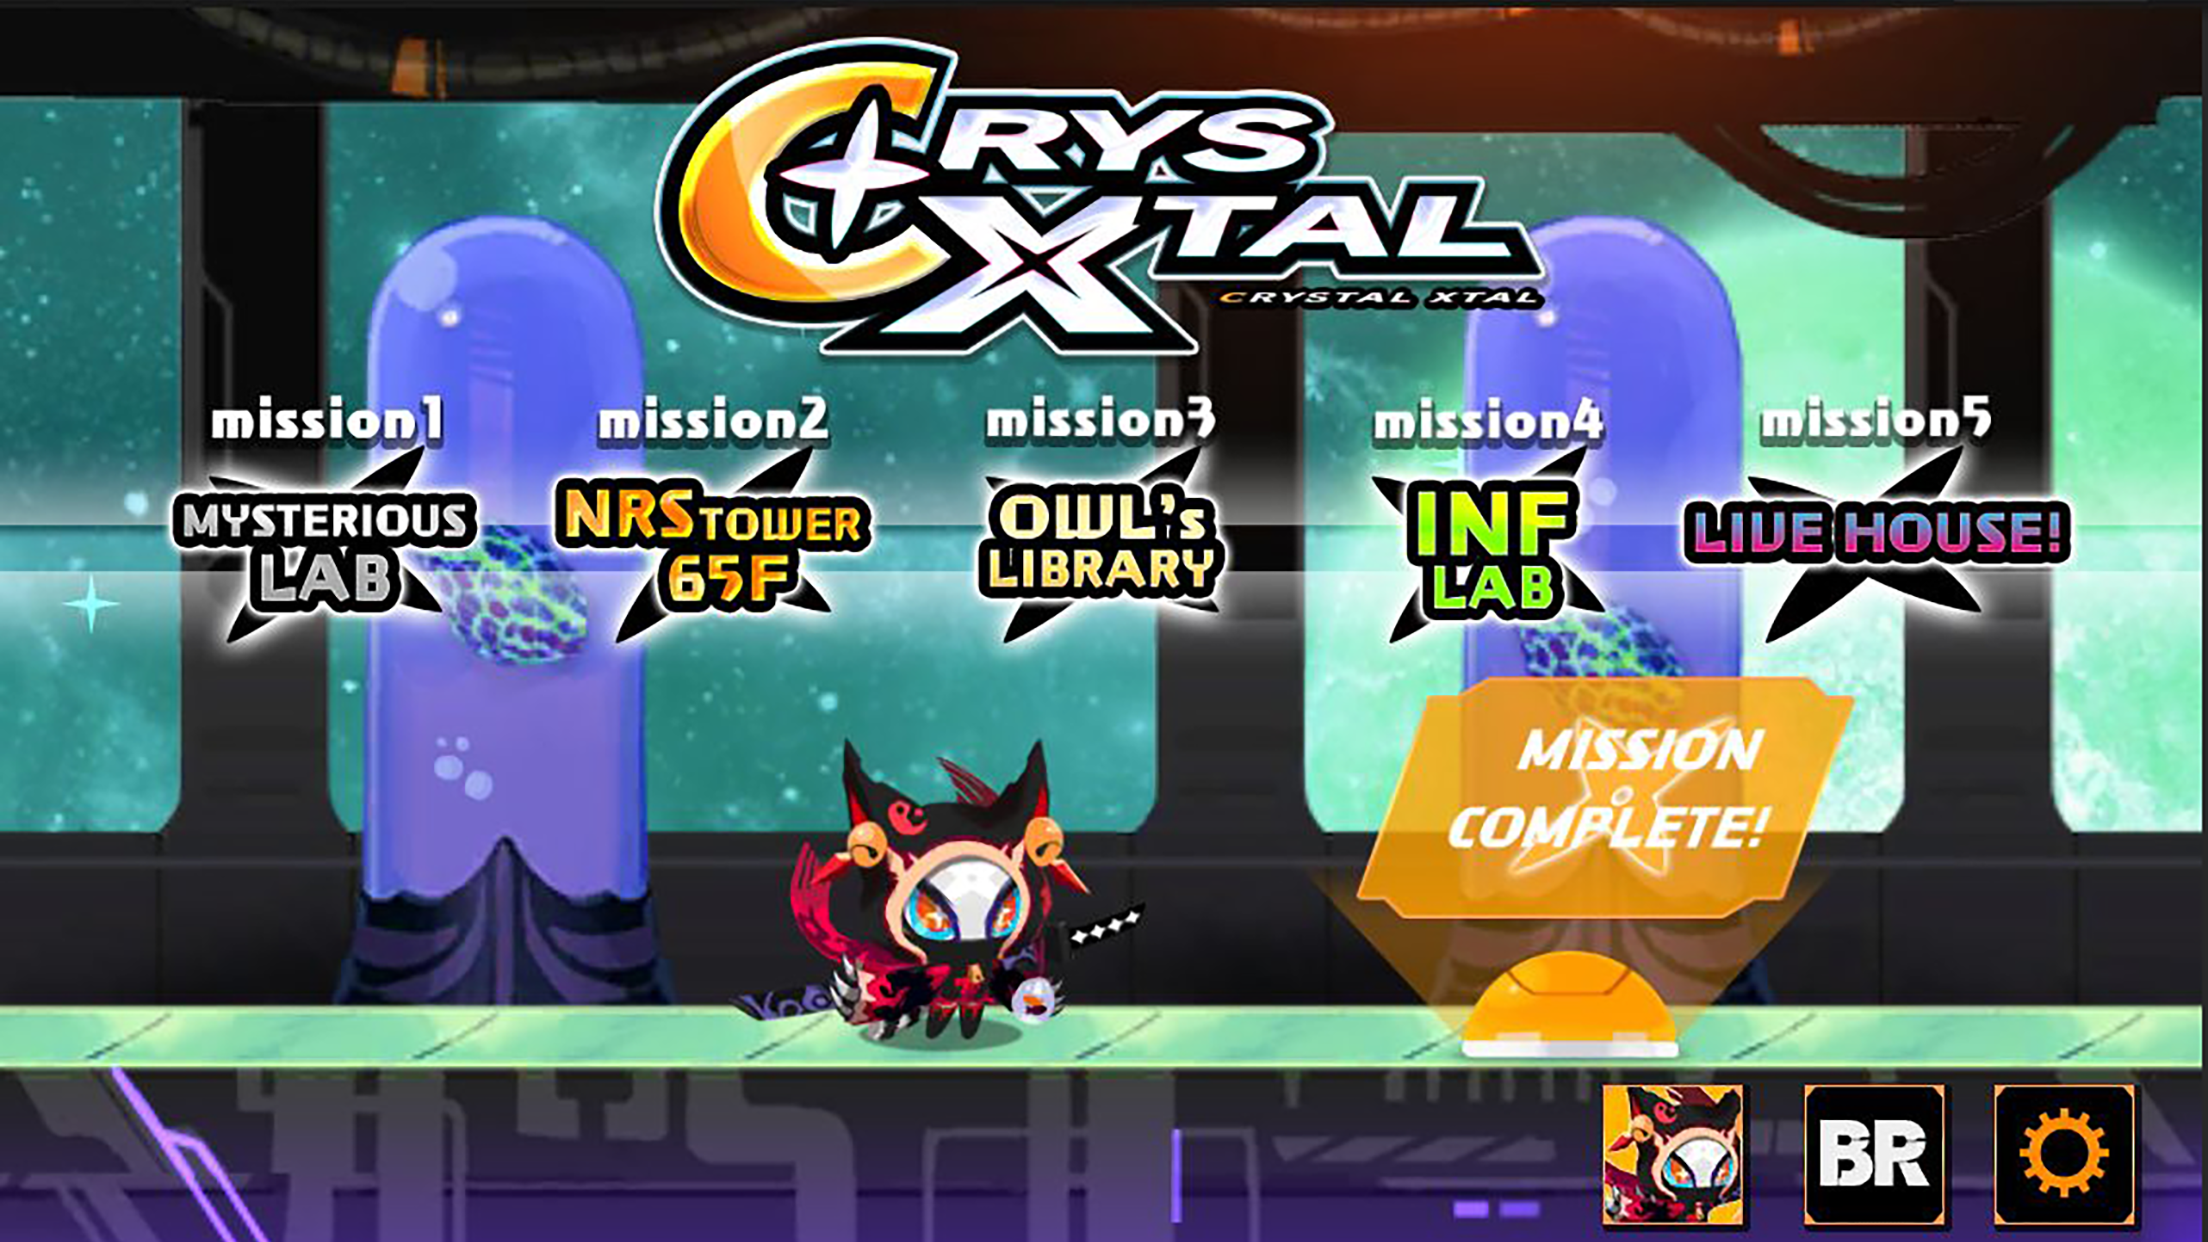 Screenshot 1 of CRYSTAL XTAL - 忍者貓射擊 1.3